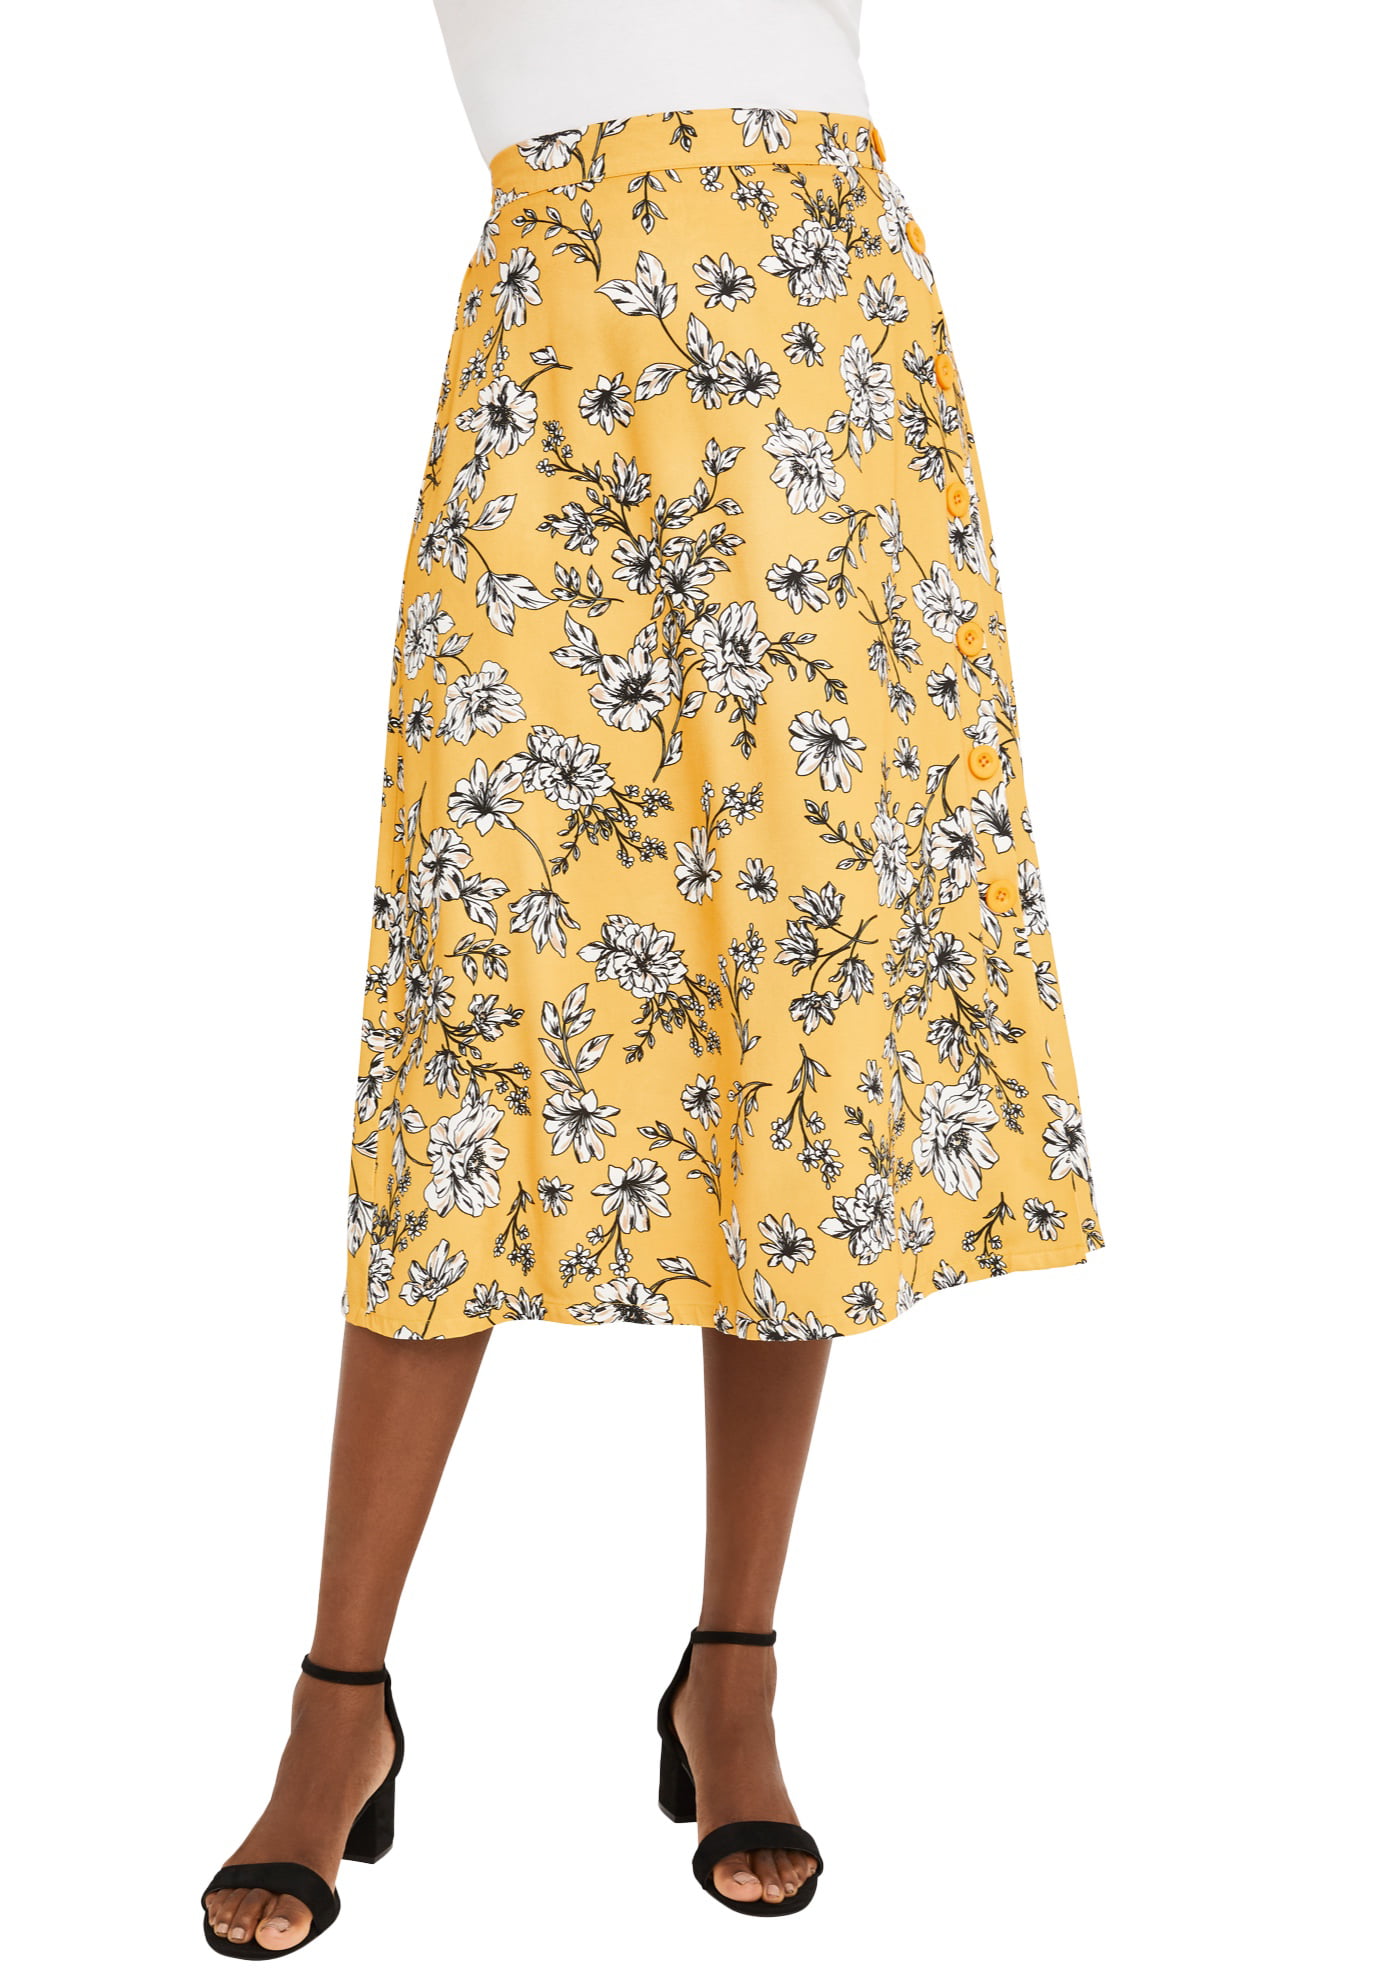 Jessica London Size Side-Button Midi Skirt - 18 W, Sunset Sketch Floral - Walmart.com